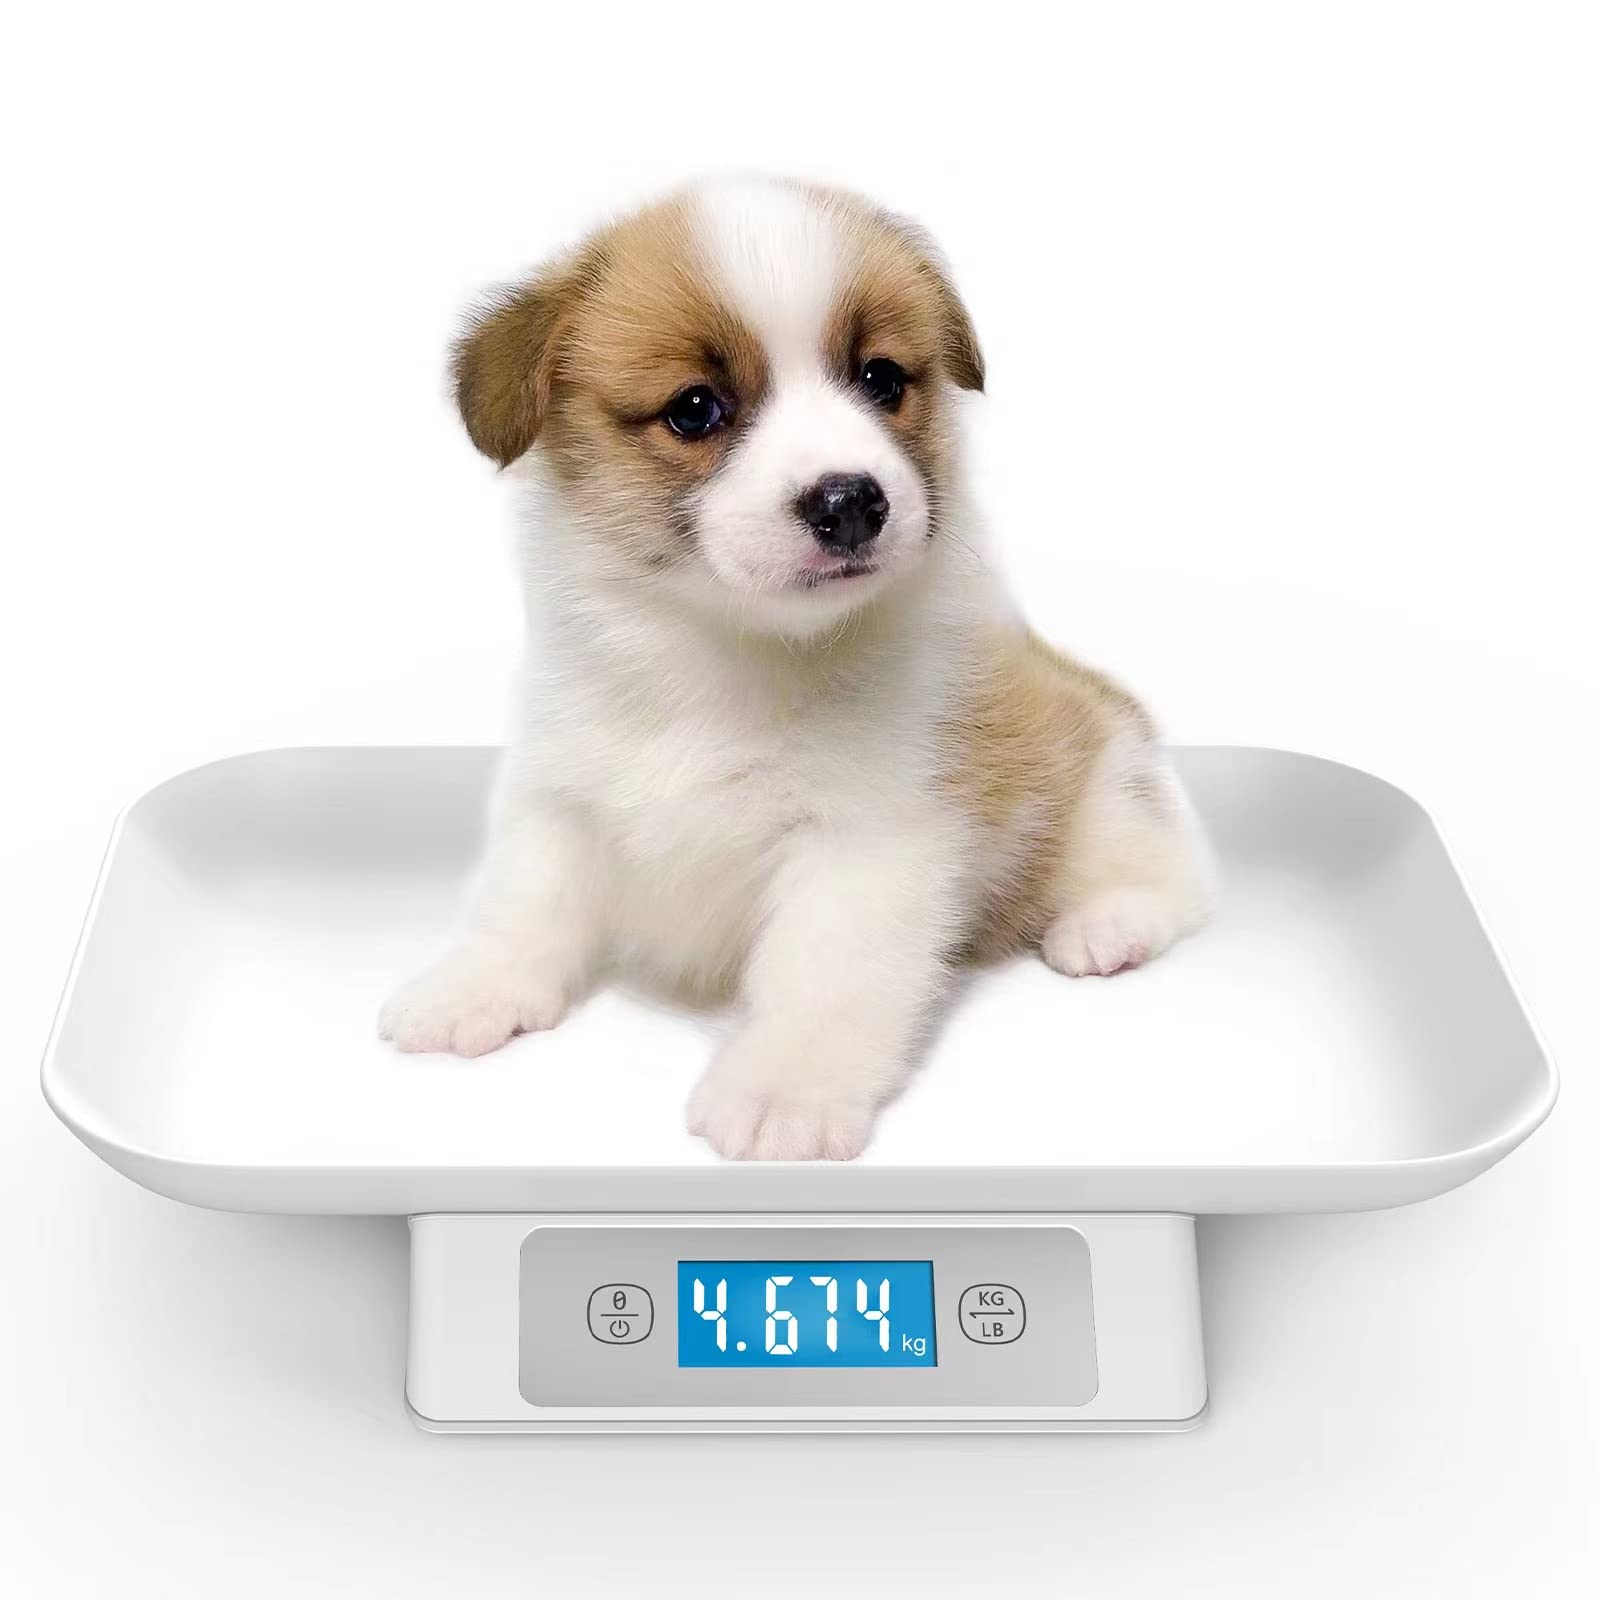 Newborn pet Scale, Puppy Scale, Kitten Scale, Small Animal Scale, pet Scale